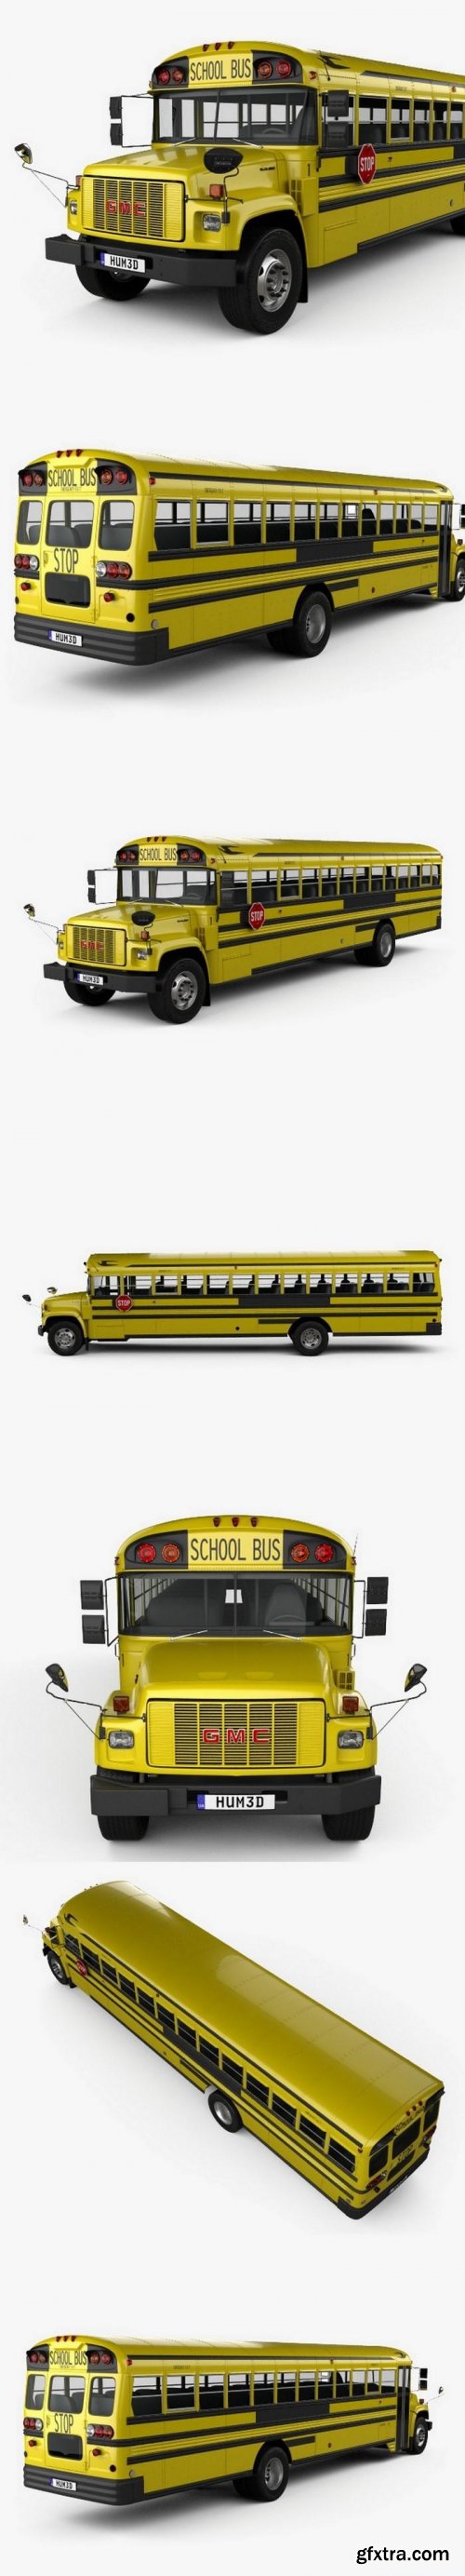 GMC B-Series School Bus 2000